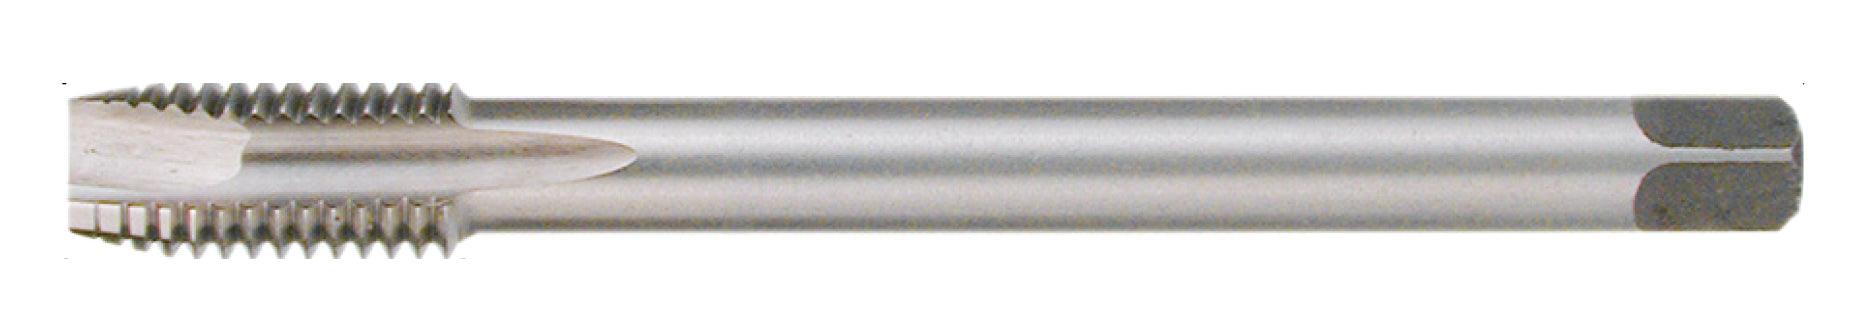 Labor Maschinengewindebohrer Durchgangslöcher M16 HSS 5% Kobalt DIN376B - SP232160 - Tools.de TP Profishop GmbH